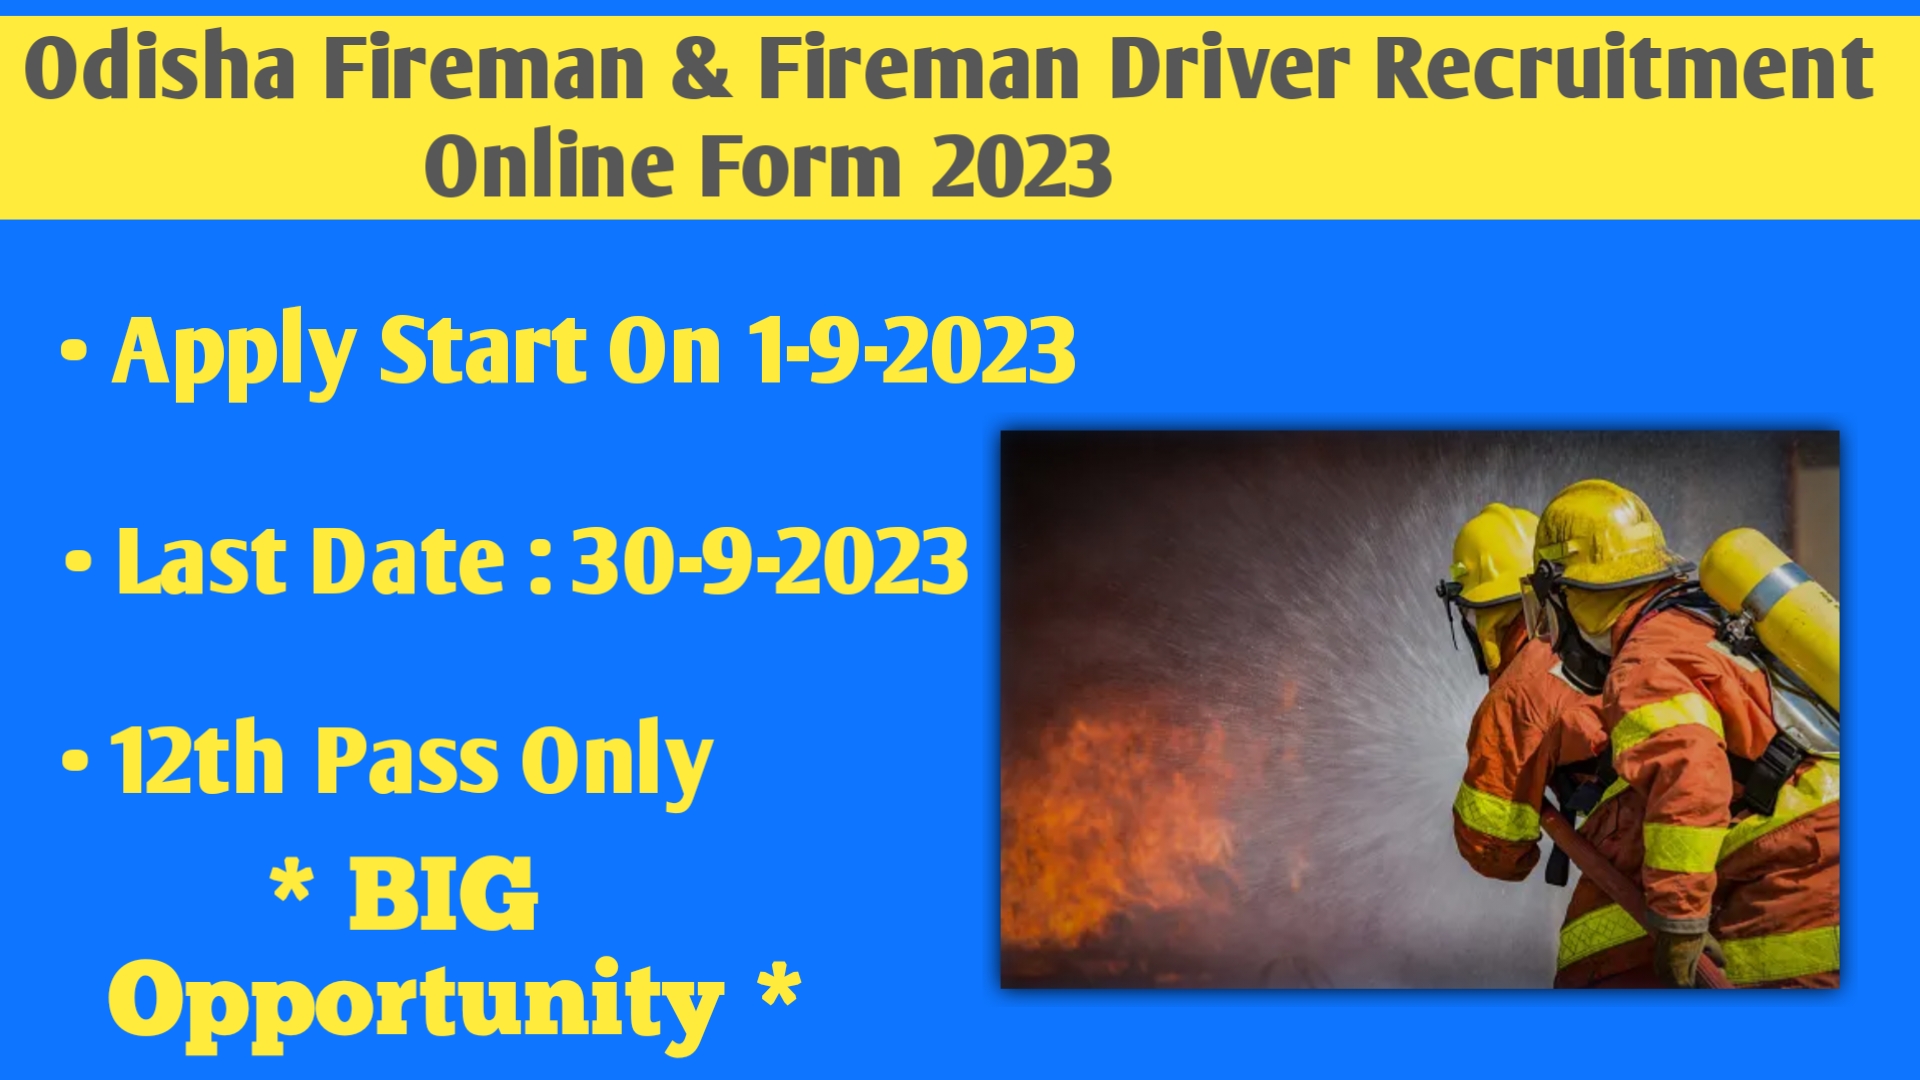 Odisha Fireman & Fireman Driver Recruitment 2023